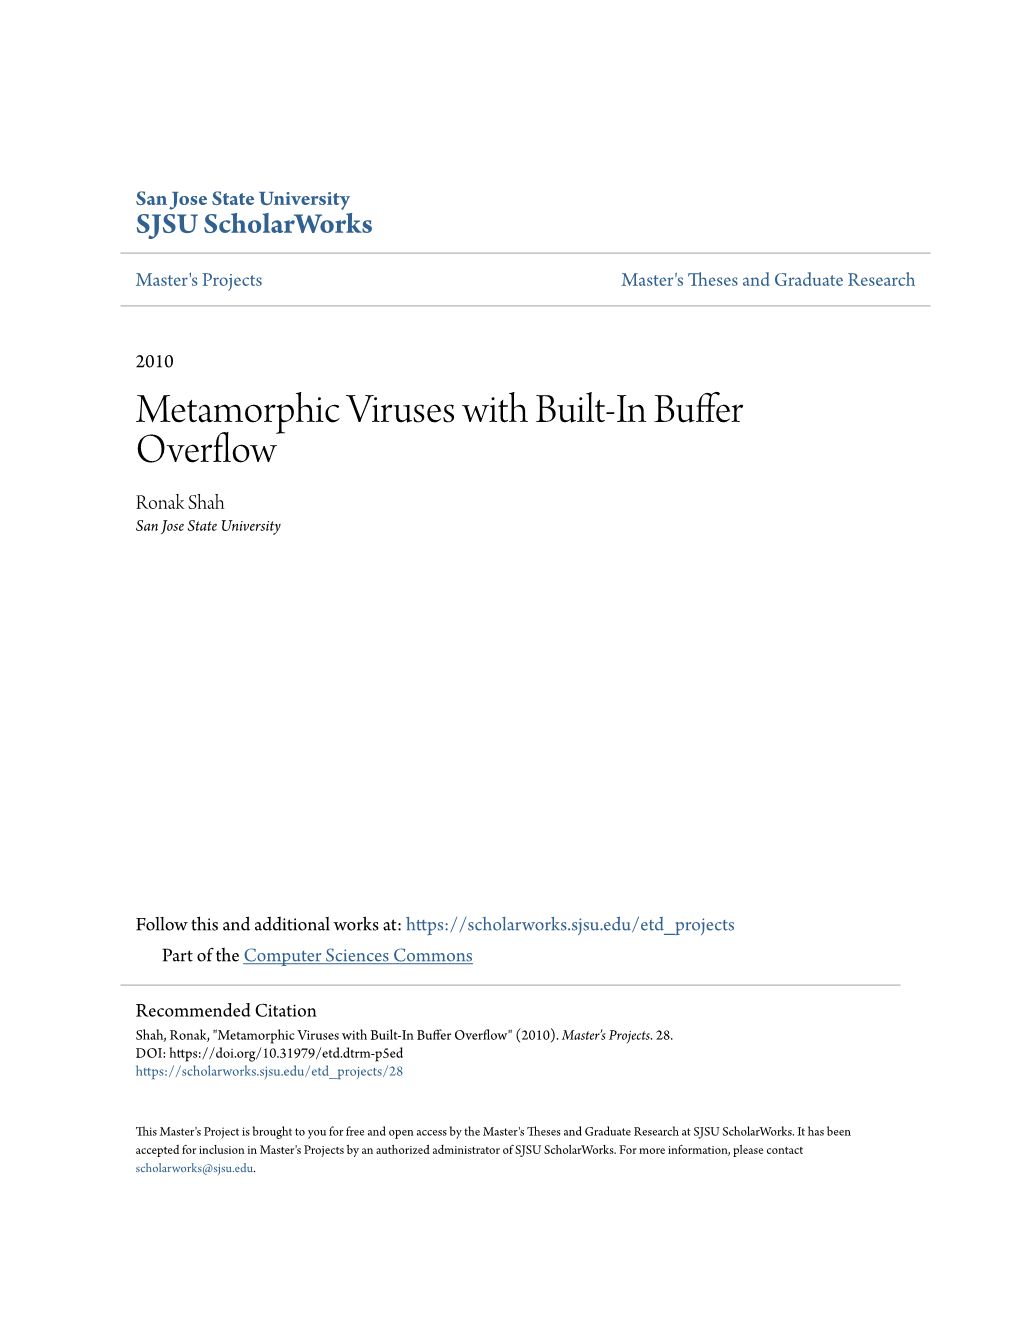 Metamorphic Viruses with Built-In Buffer Overflow Ronak Shah San Jose State University